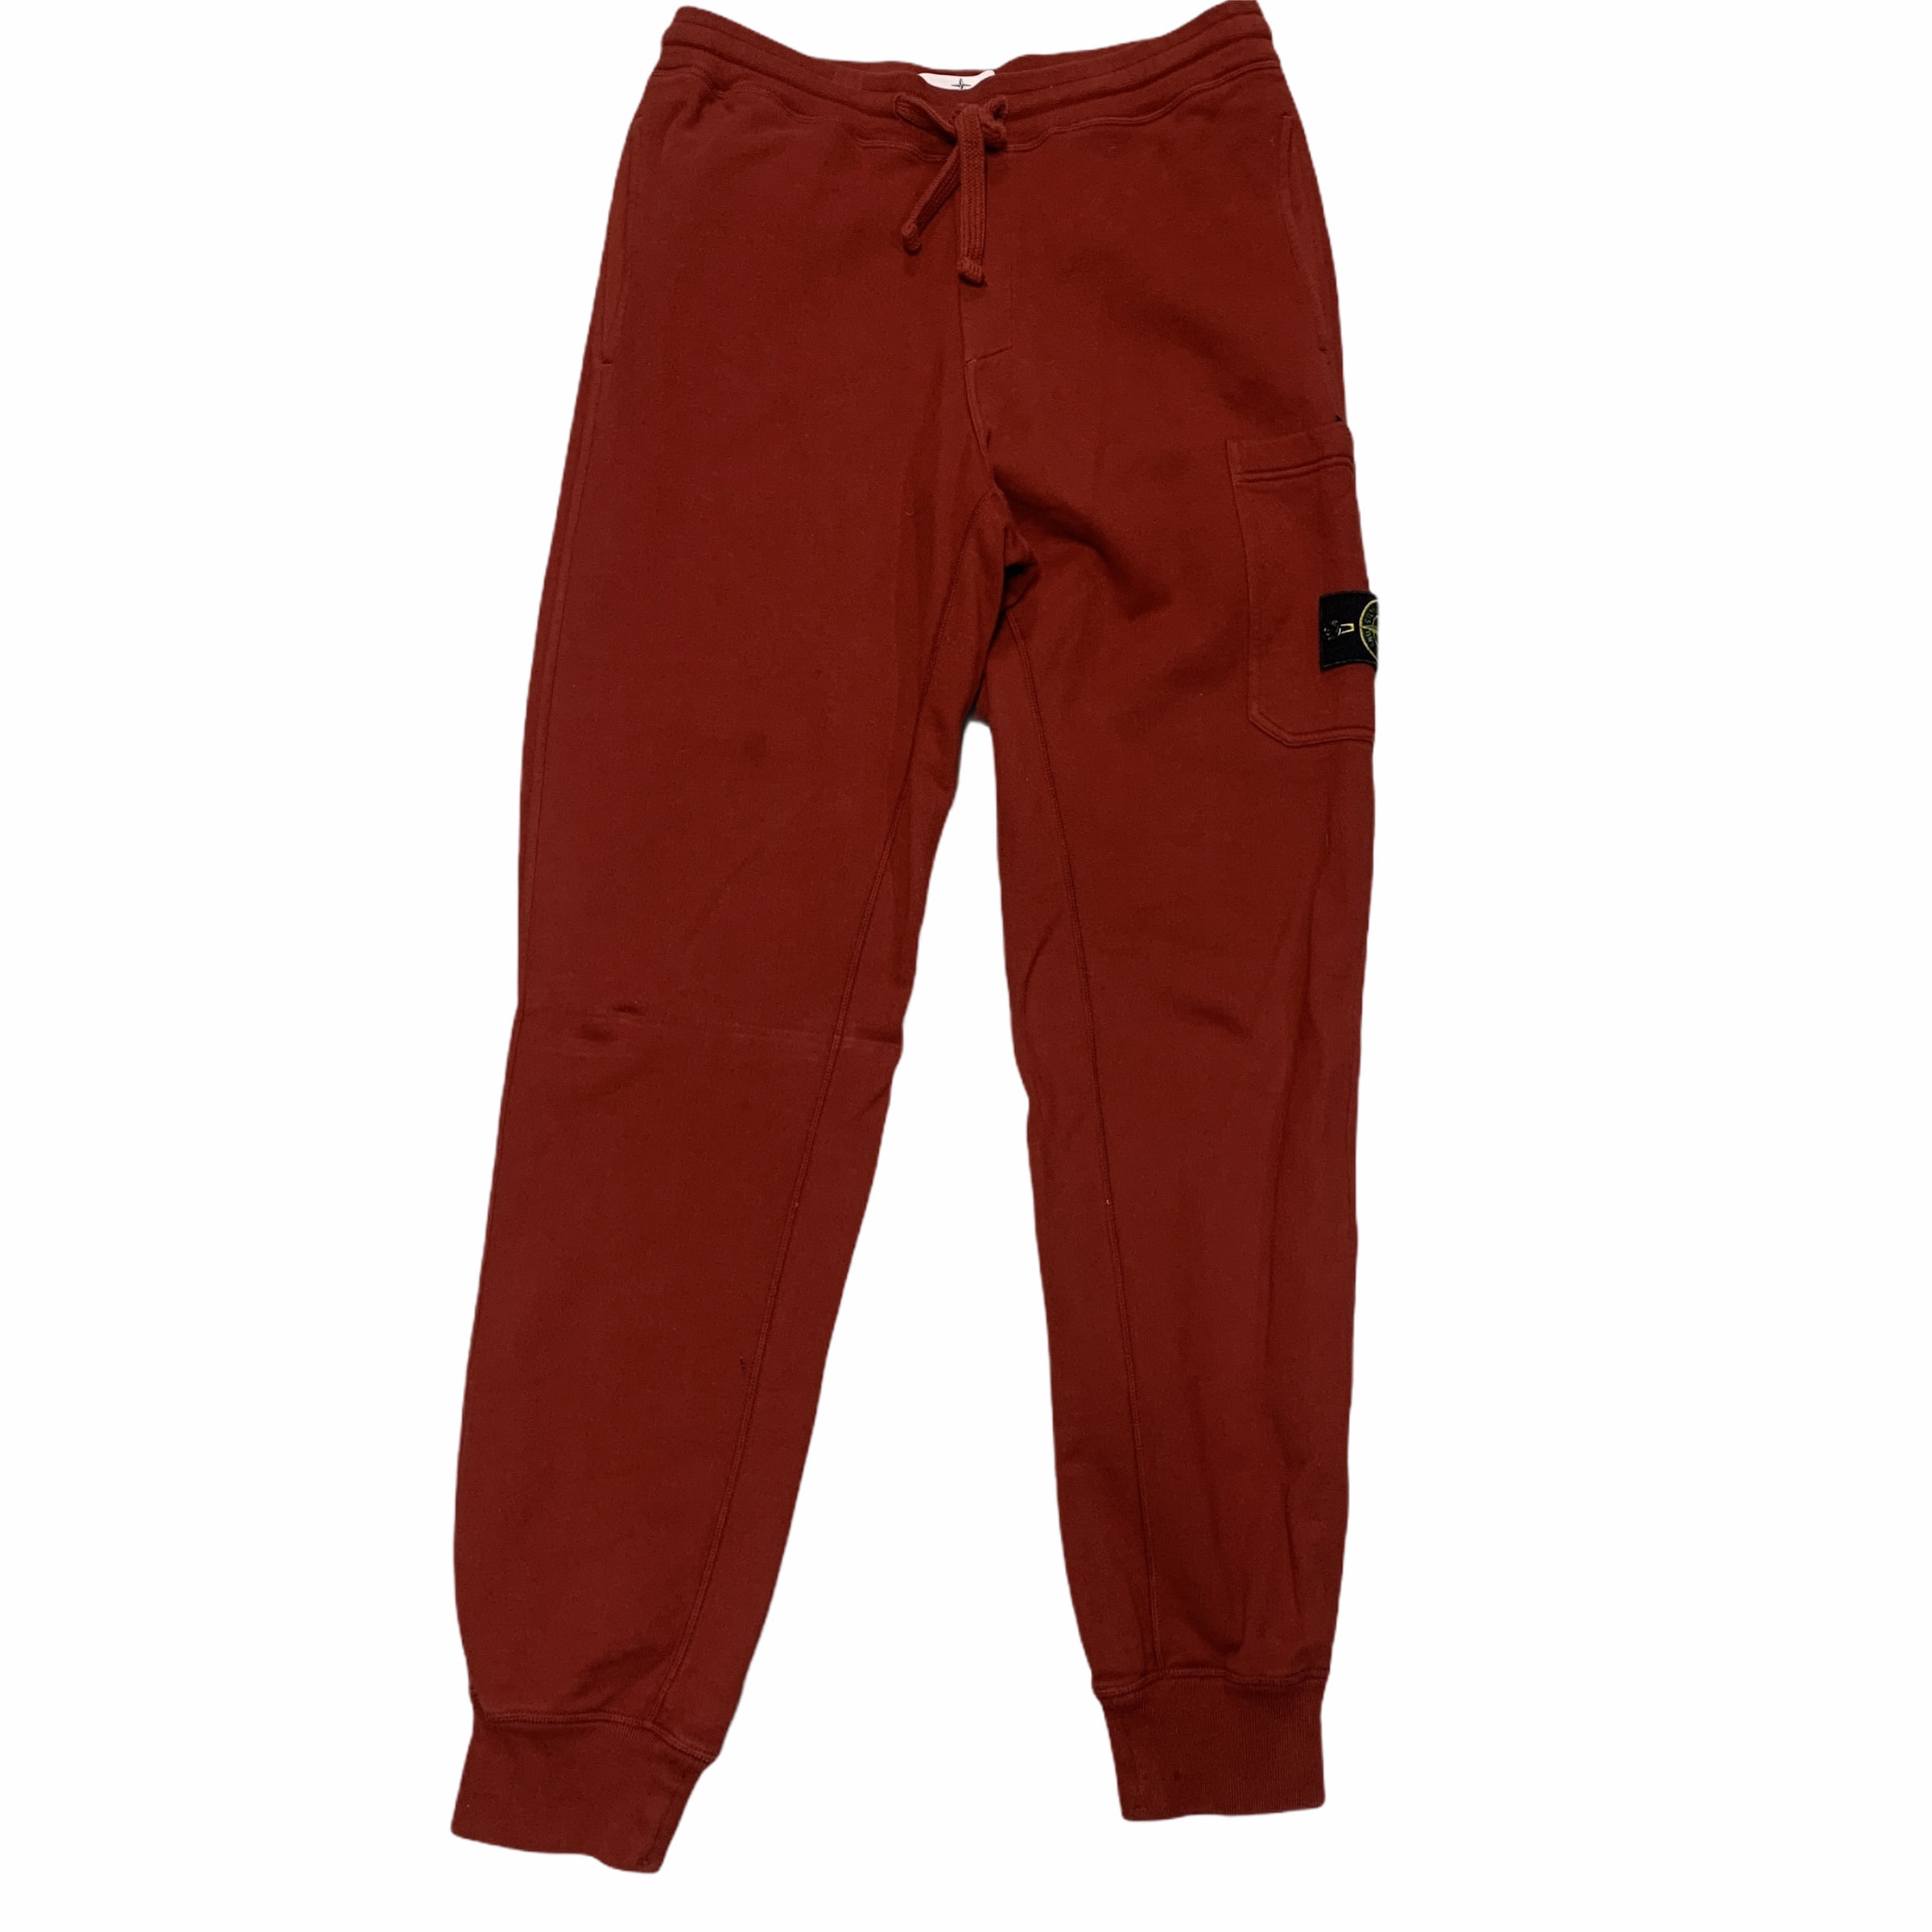 [Stone Island] Wappen Joger Pants RED - Size L